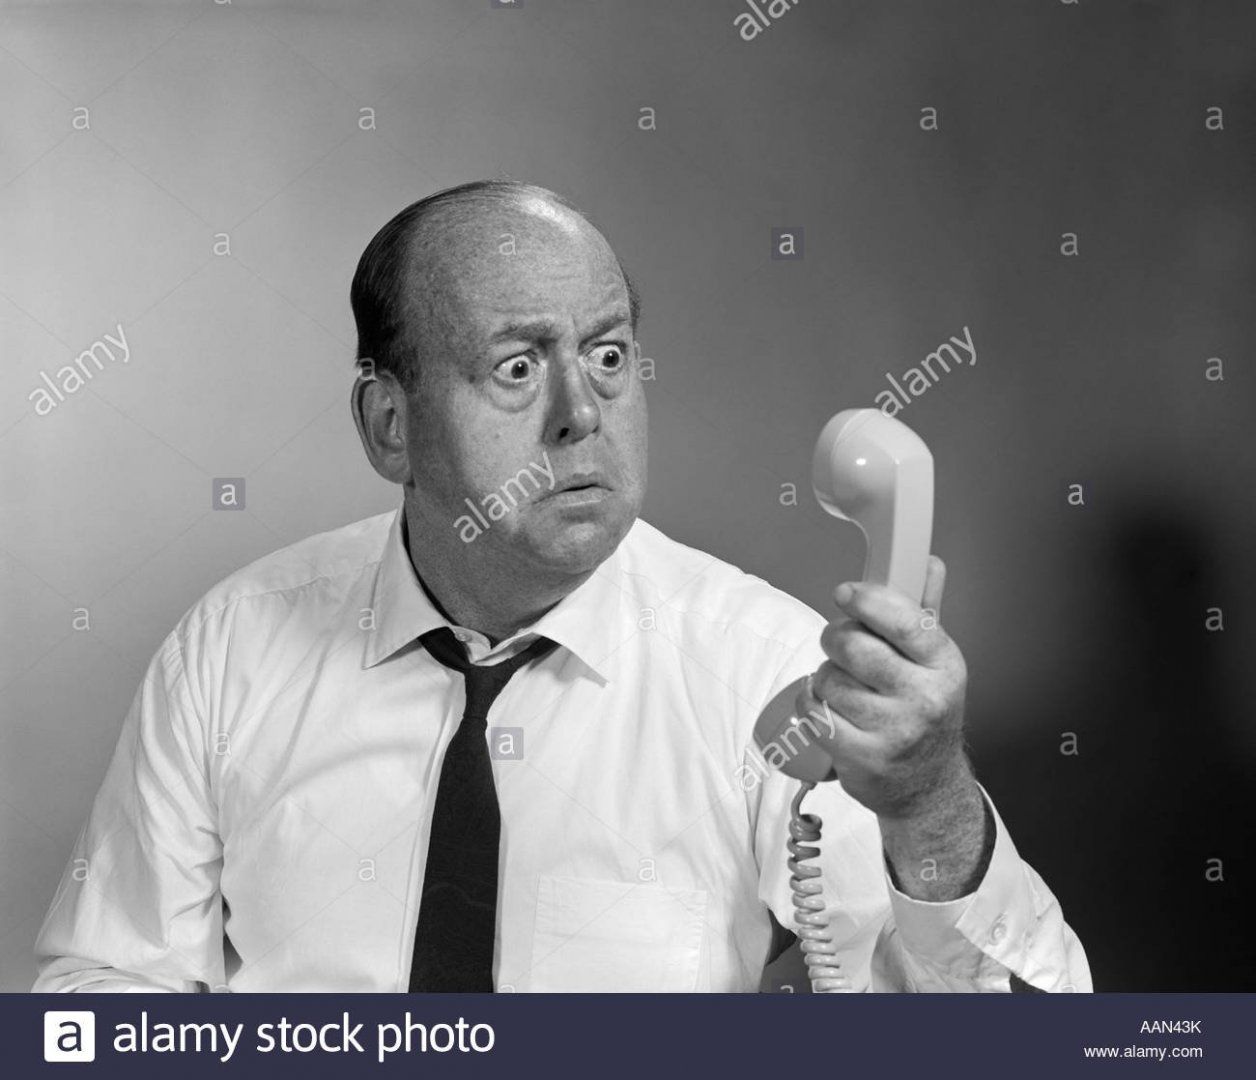 1960s-balding-man-looking-angry-into-telephone-receiver-AAN43K.jpg